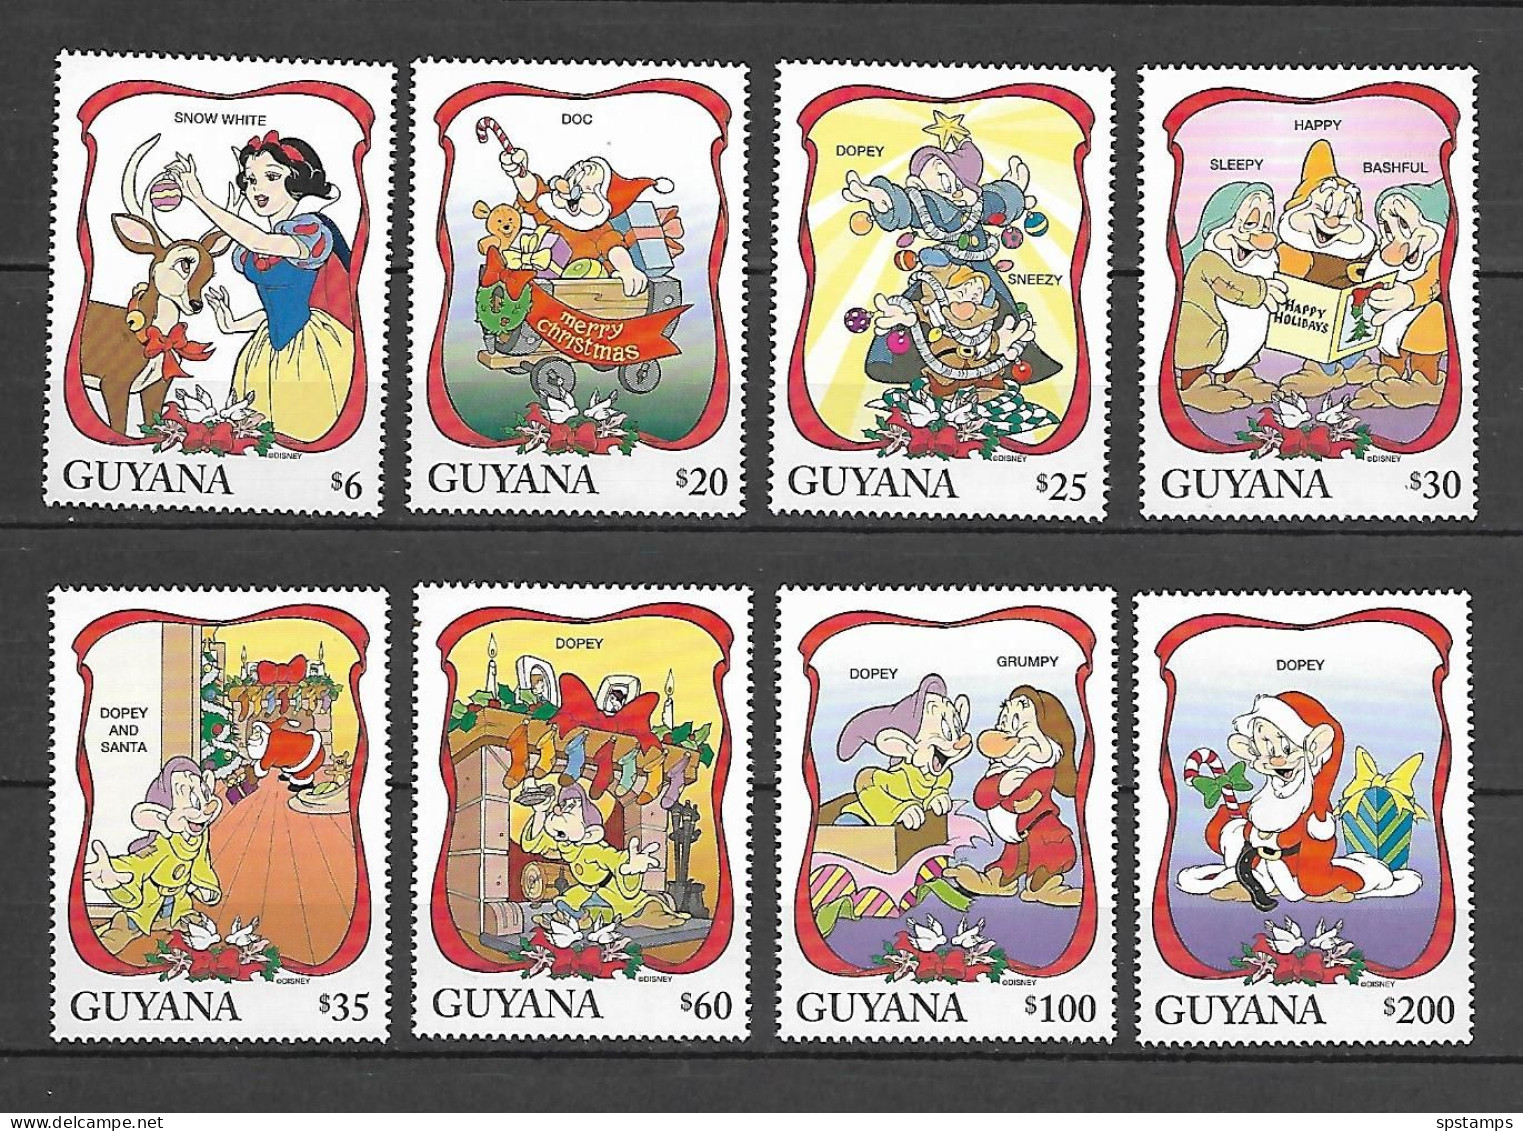 Disney Set Guyana 1996 Snow White MNH - Disney